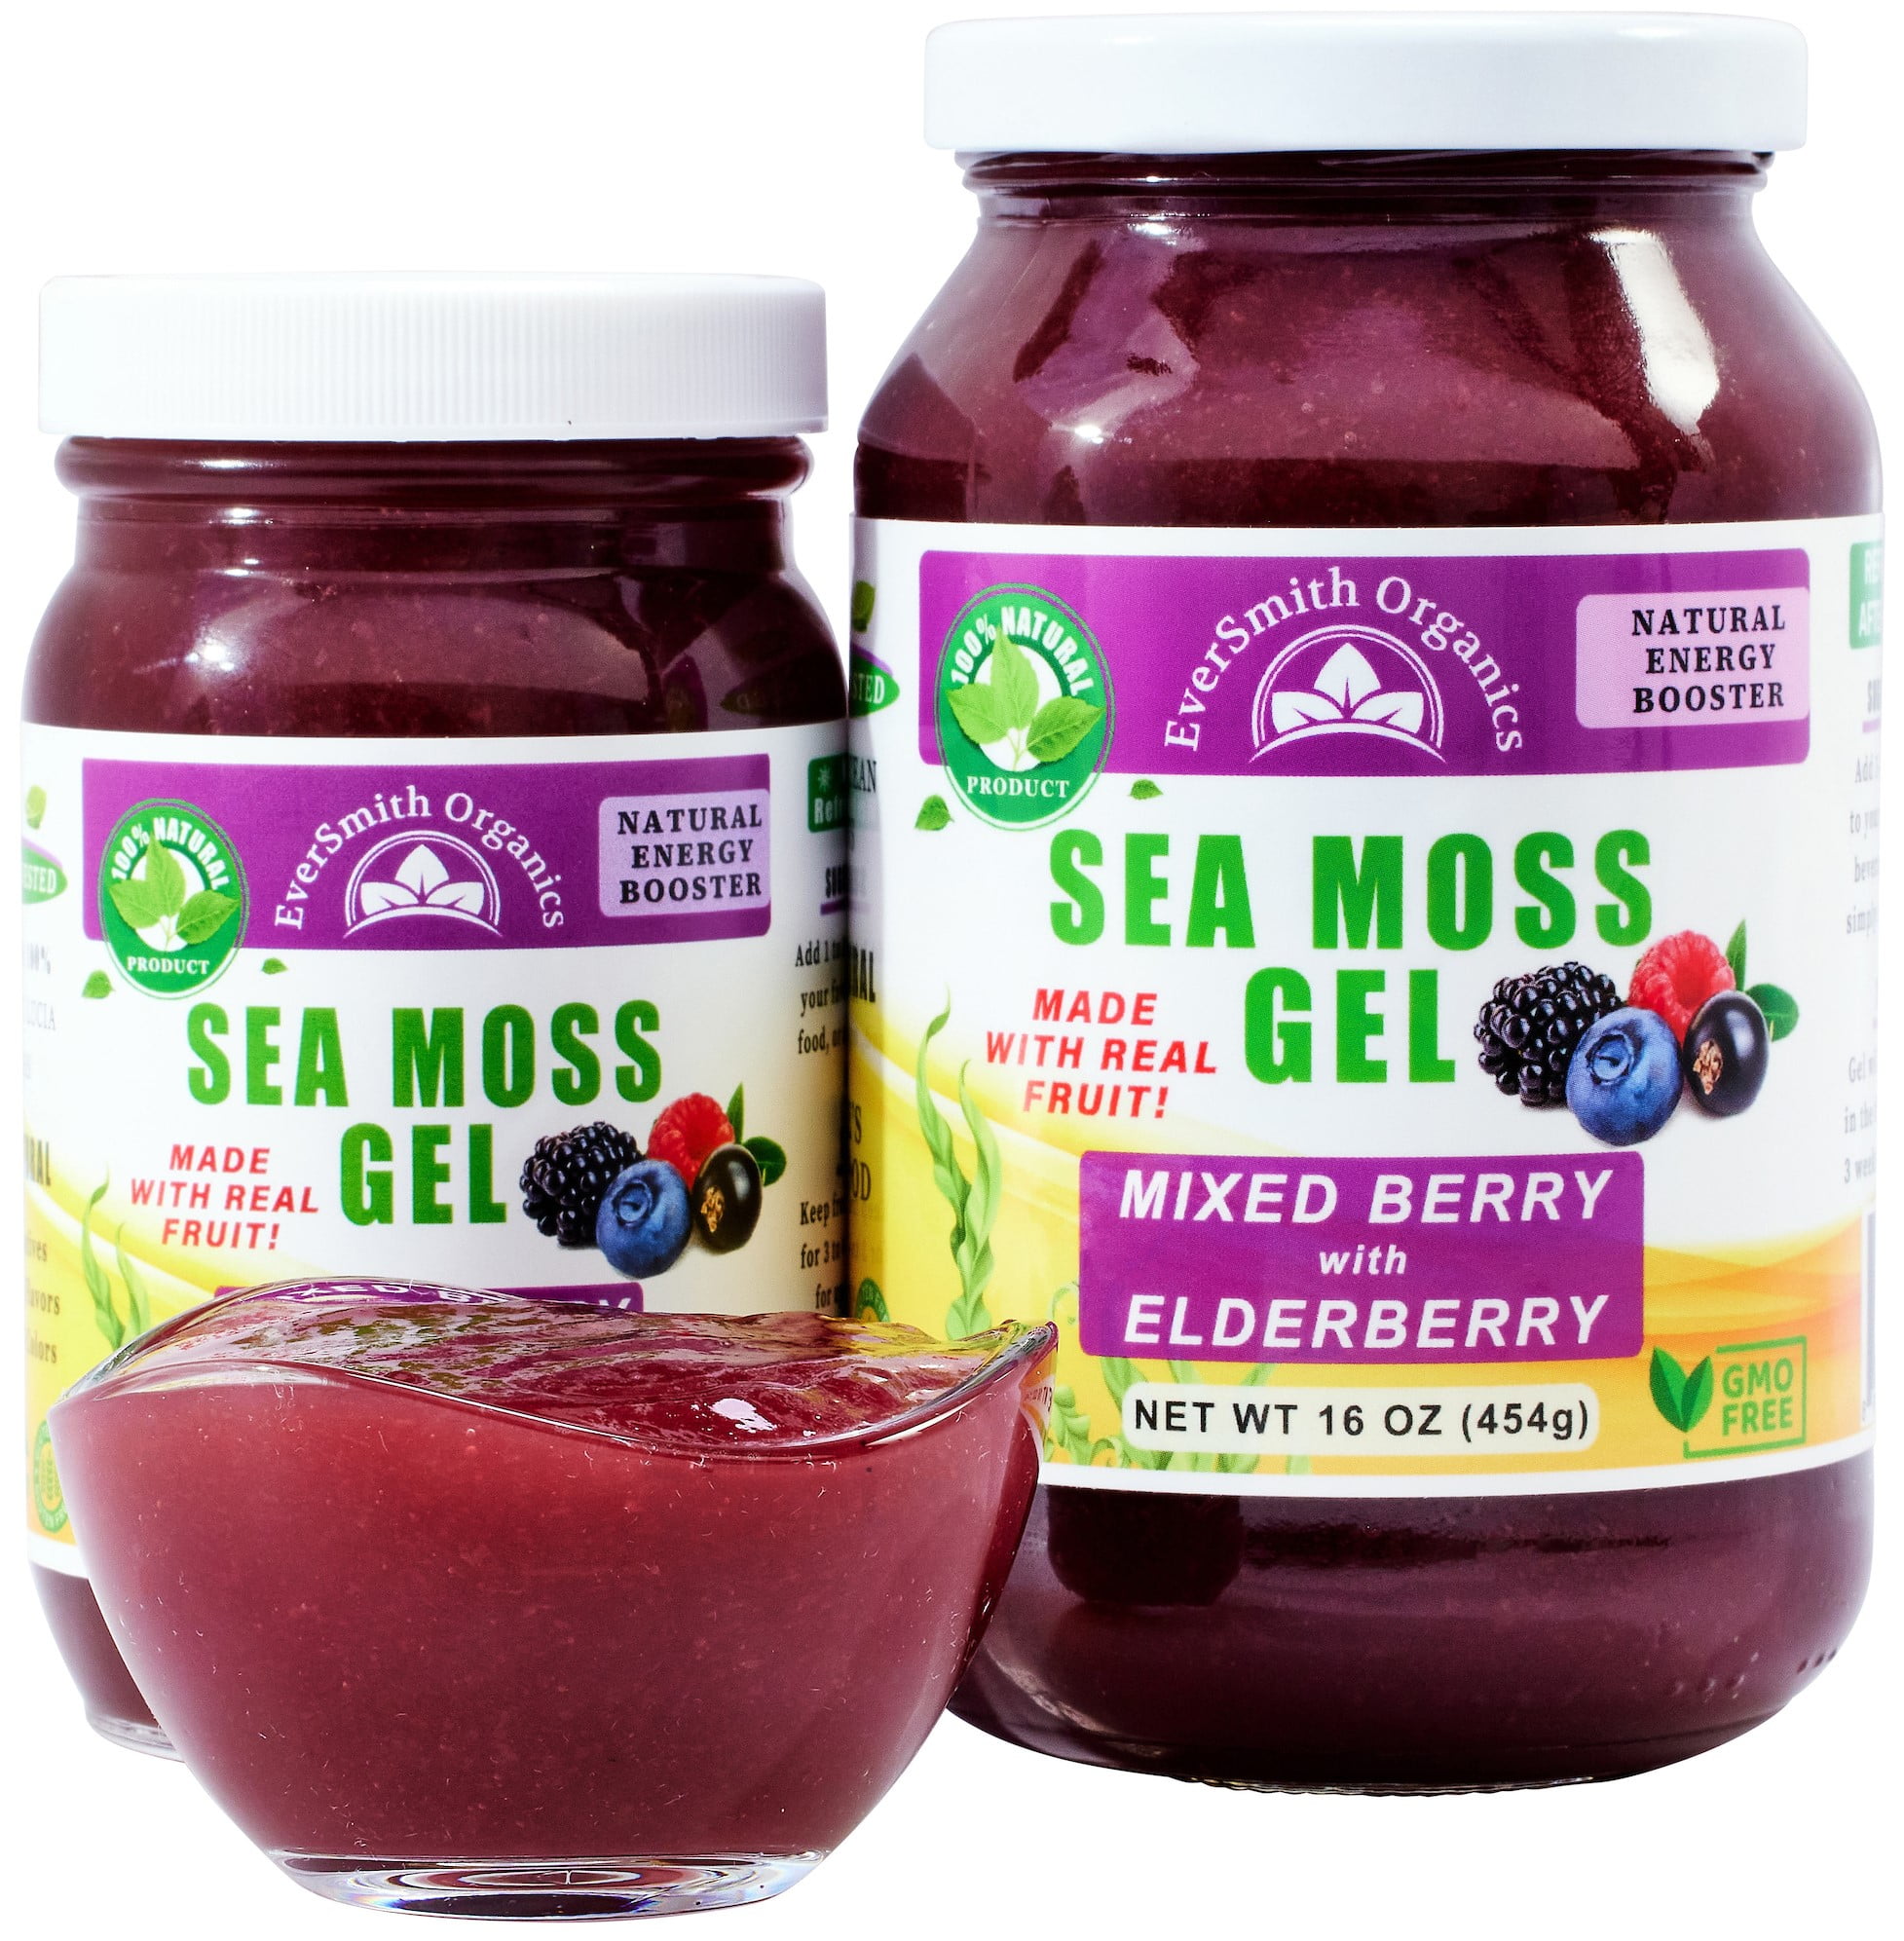 Wildcrafted Sea Moss Gel – Organics Nature